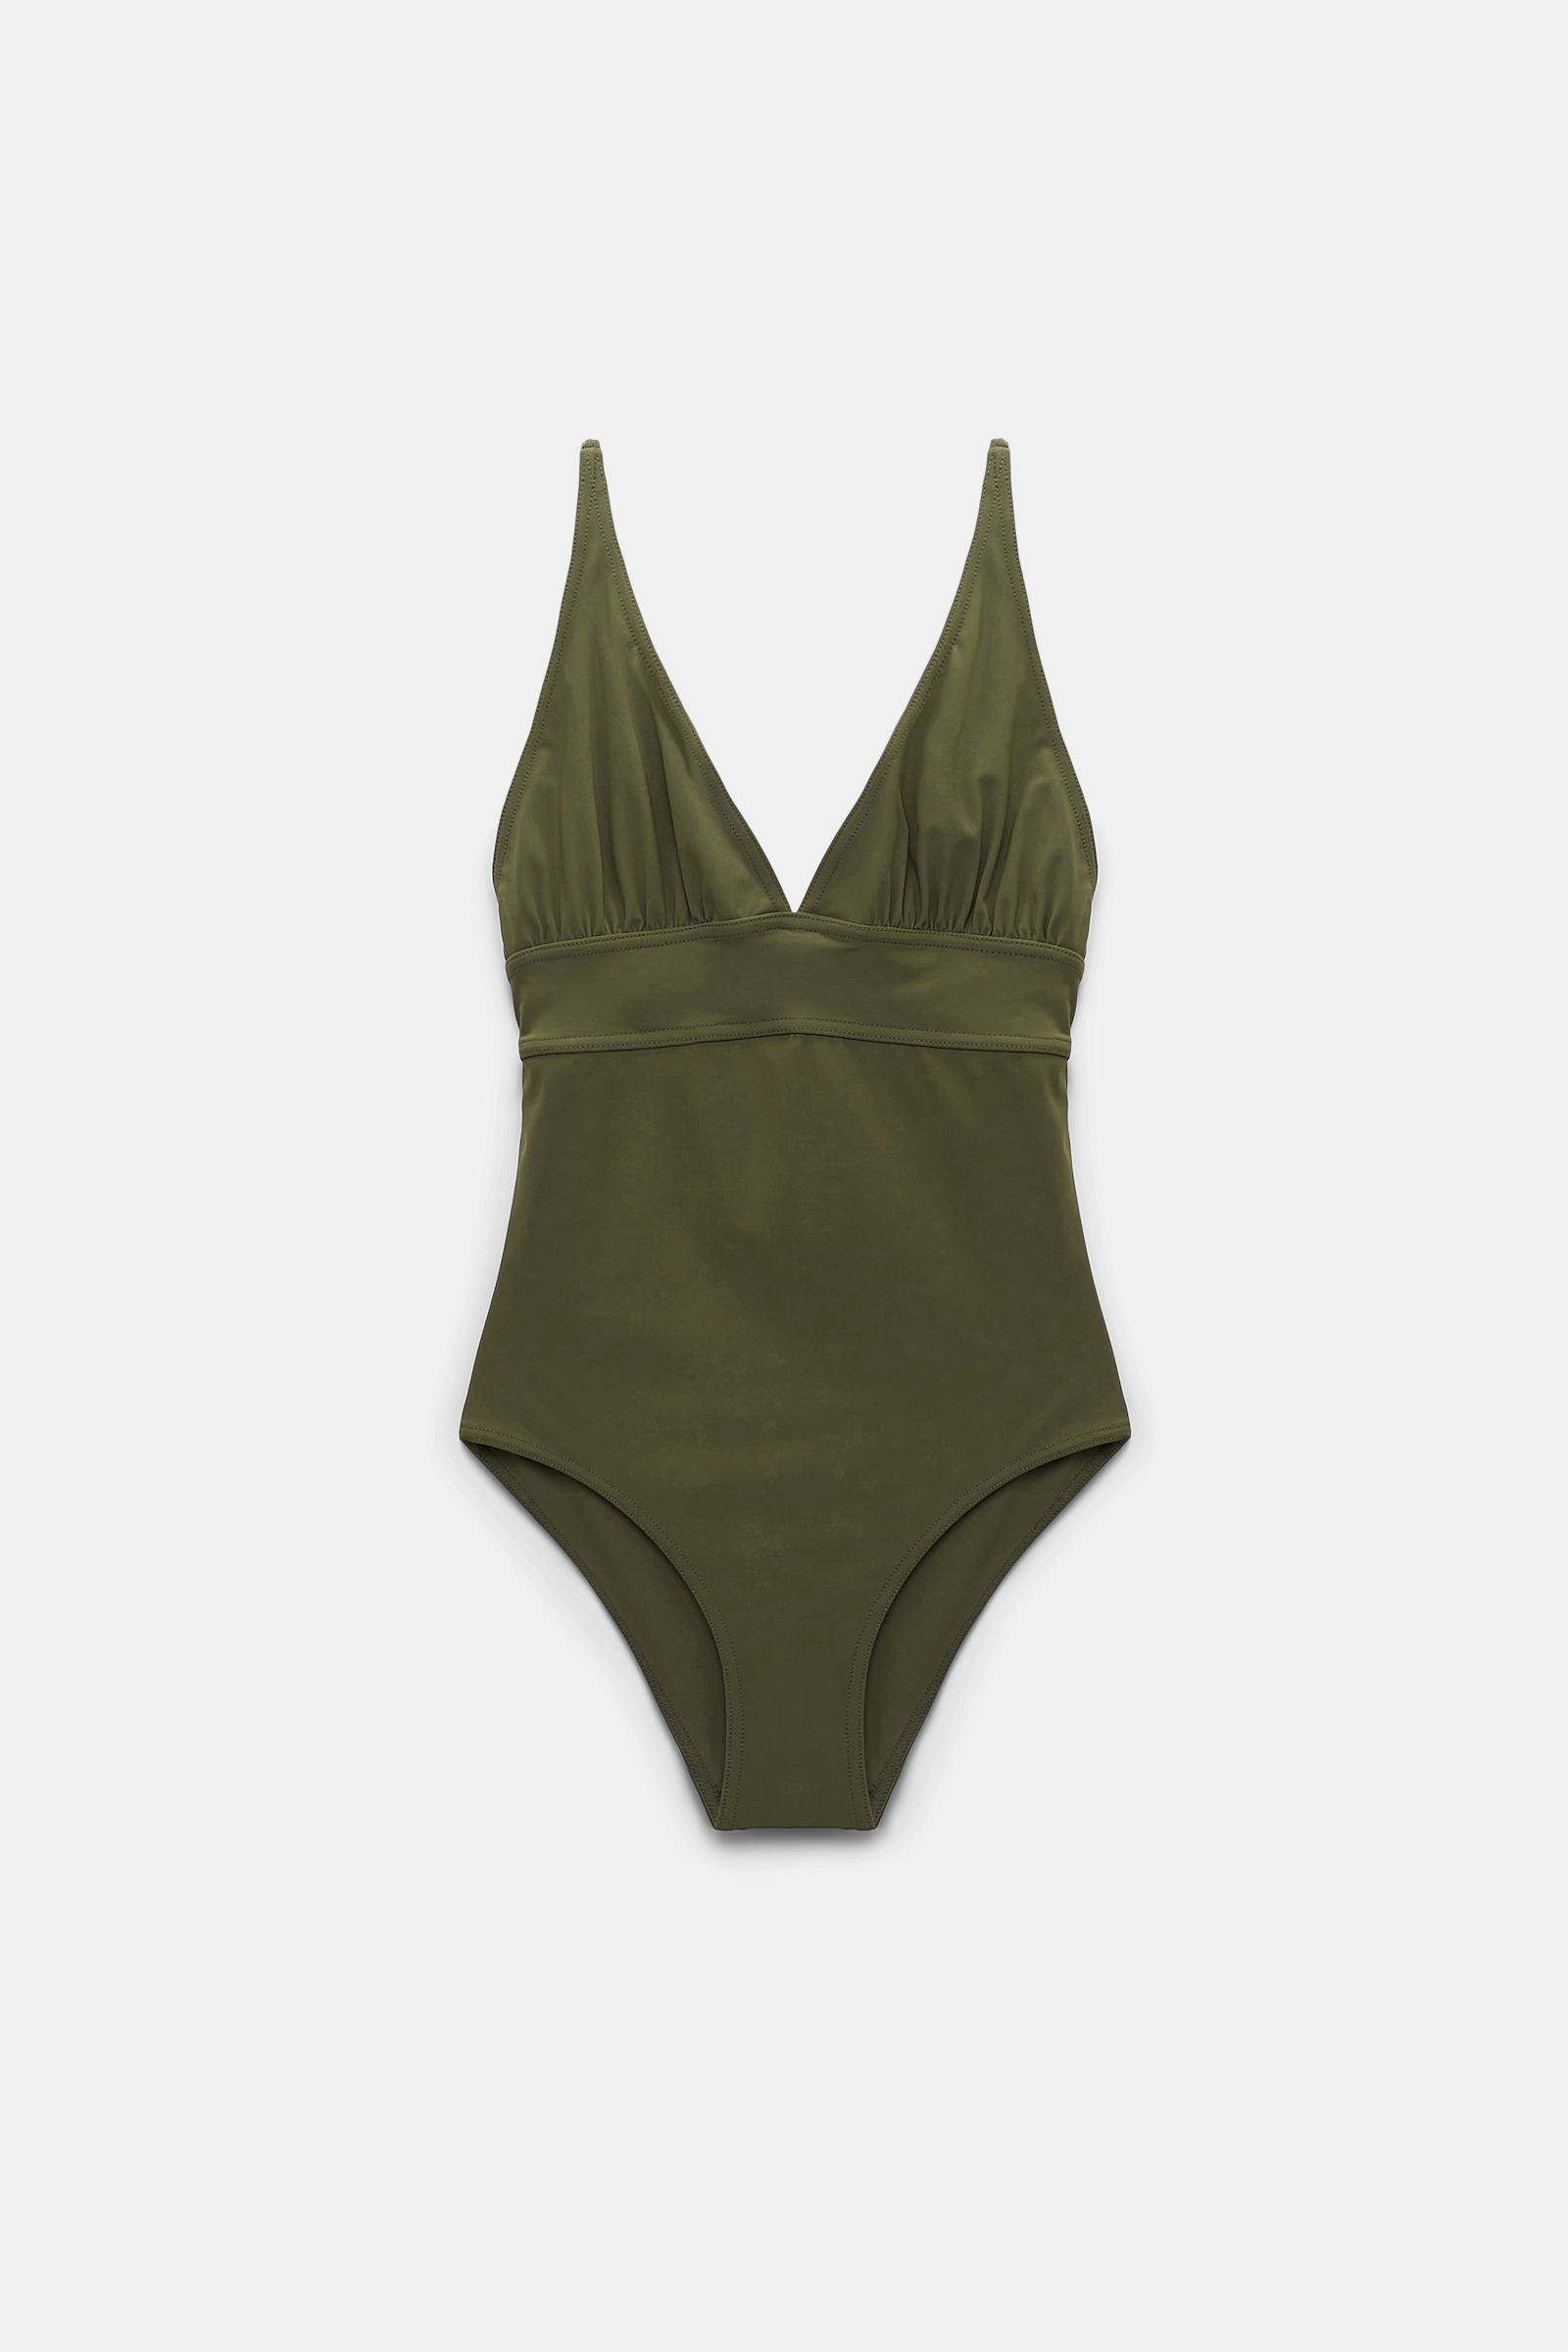 Dorothee Schumacher One piece swimsuit with adjustable straps dark olive green